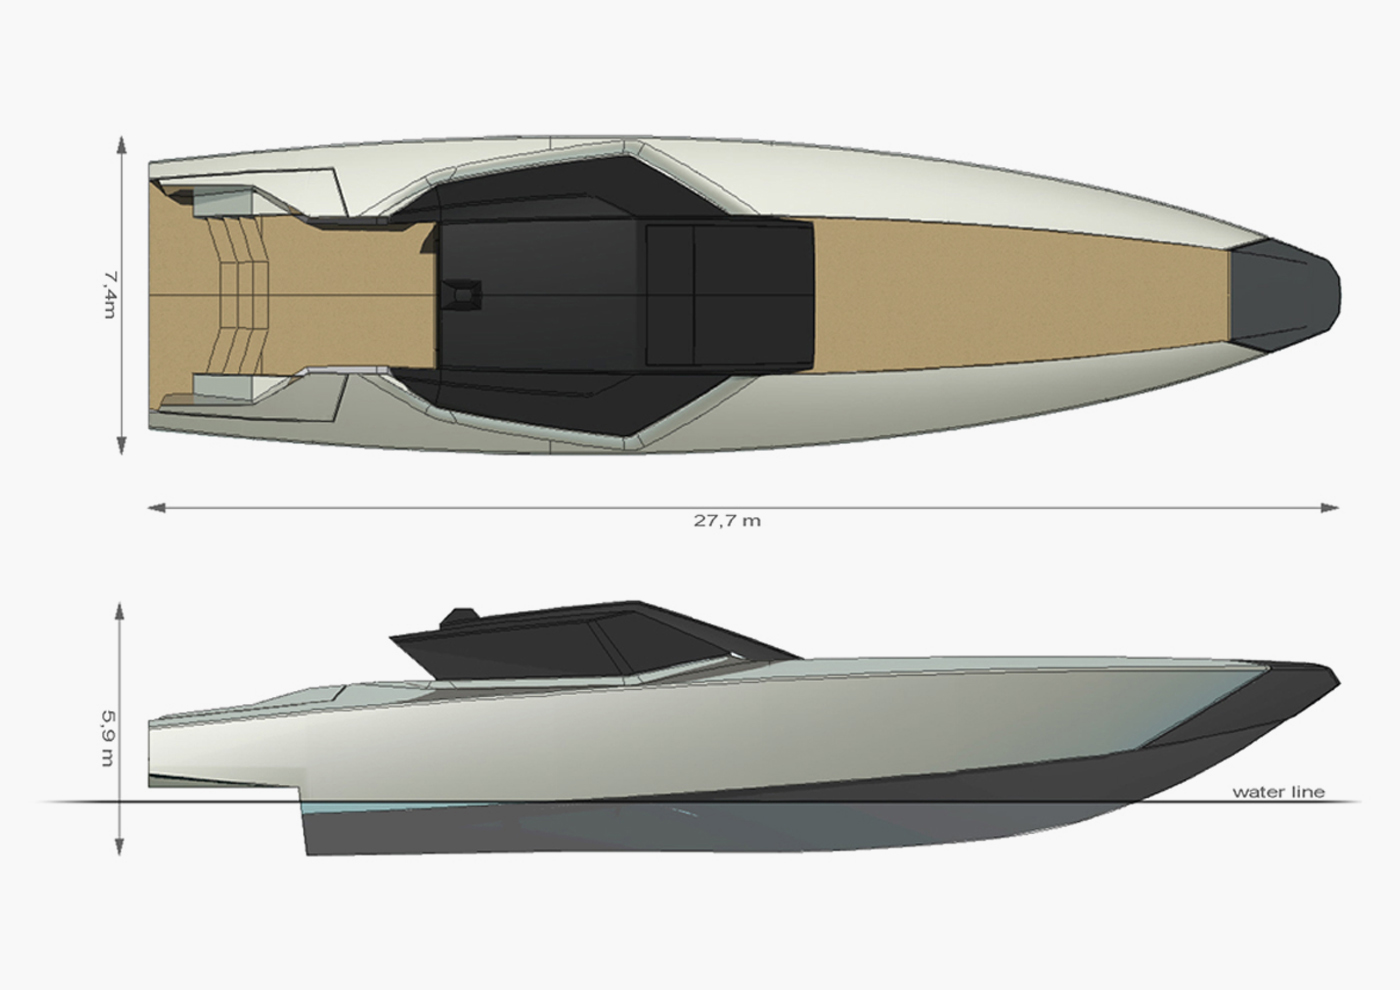 Yacht design - 90 Feet - Power boat -Dimensions - Davide Mezzasalma - Furniture design - Berlin